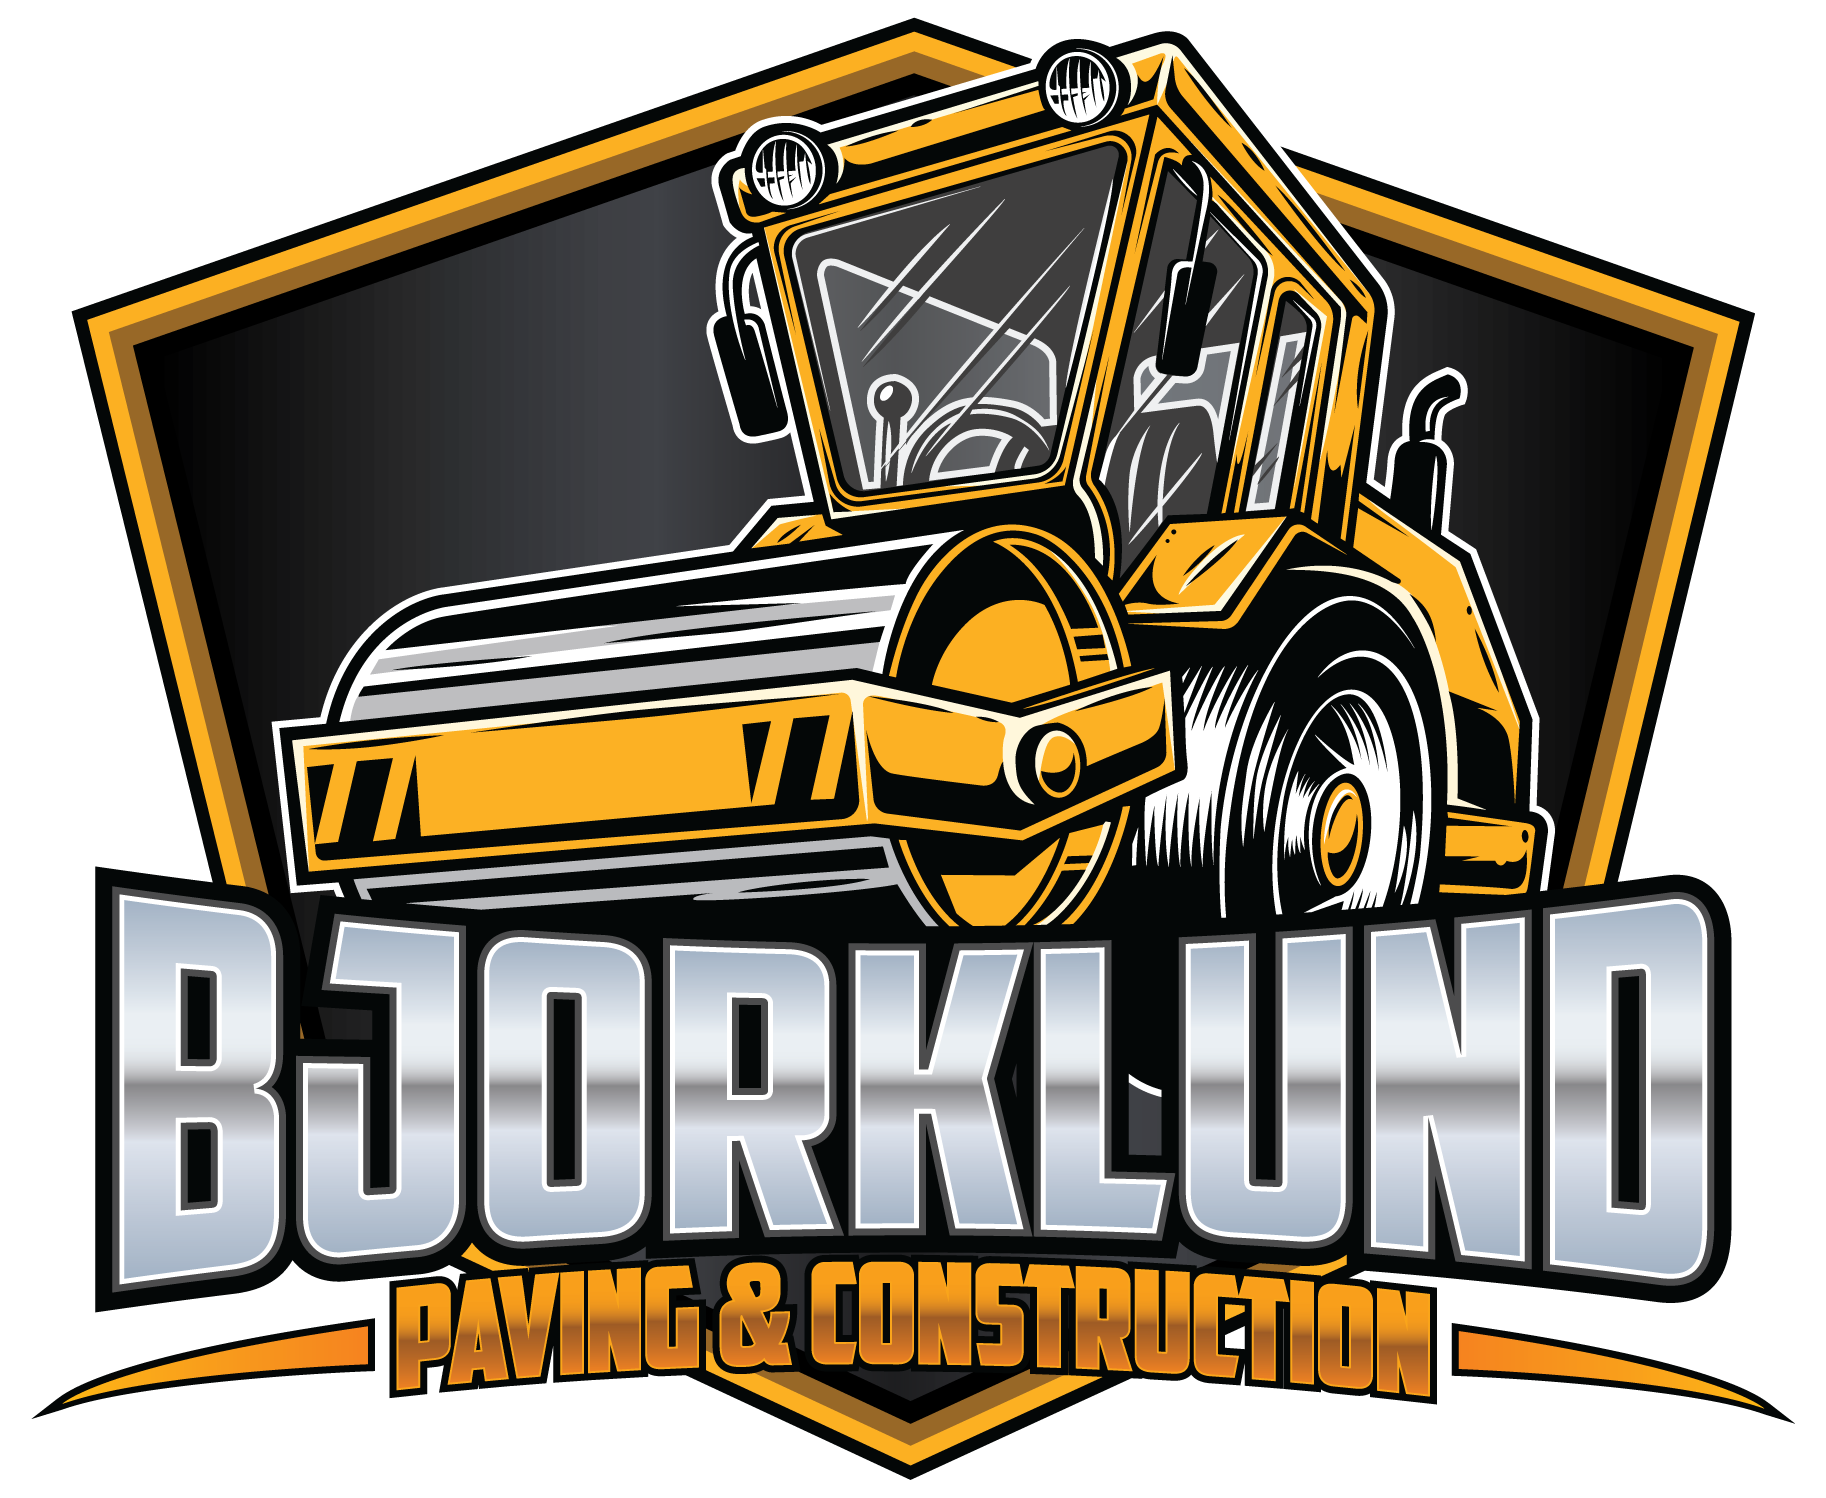 Bjorklund Paving & Construction LLC Logo